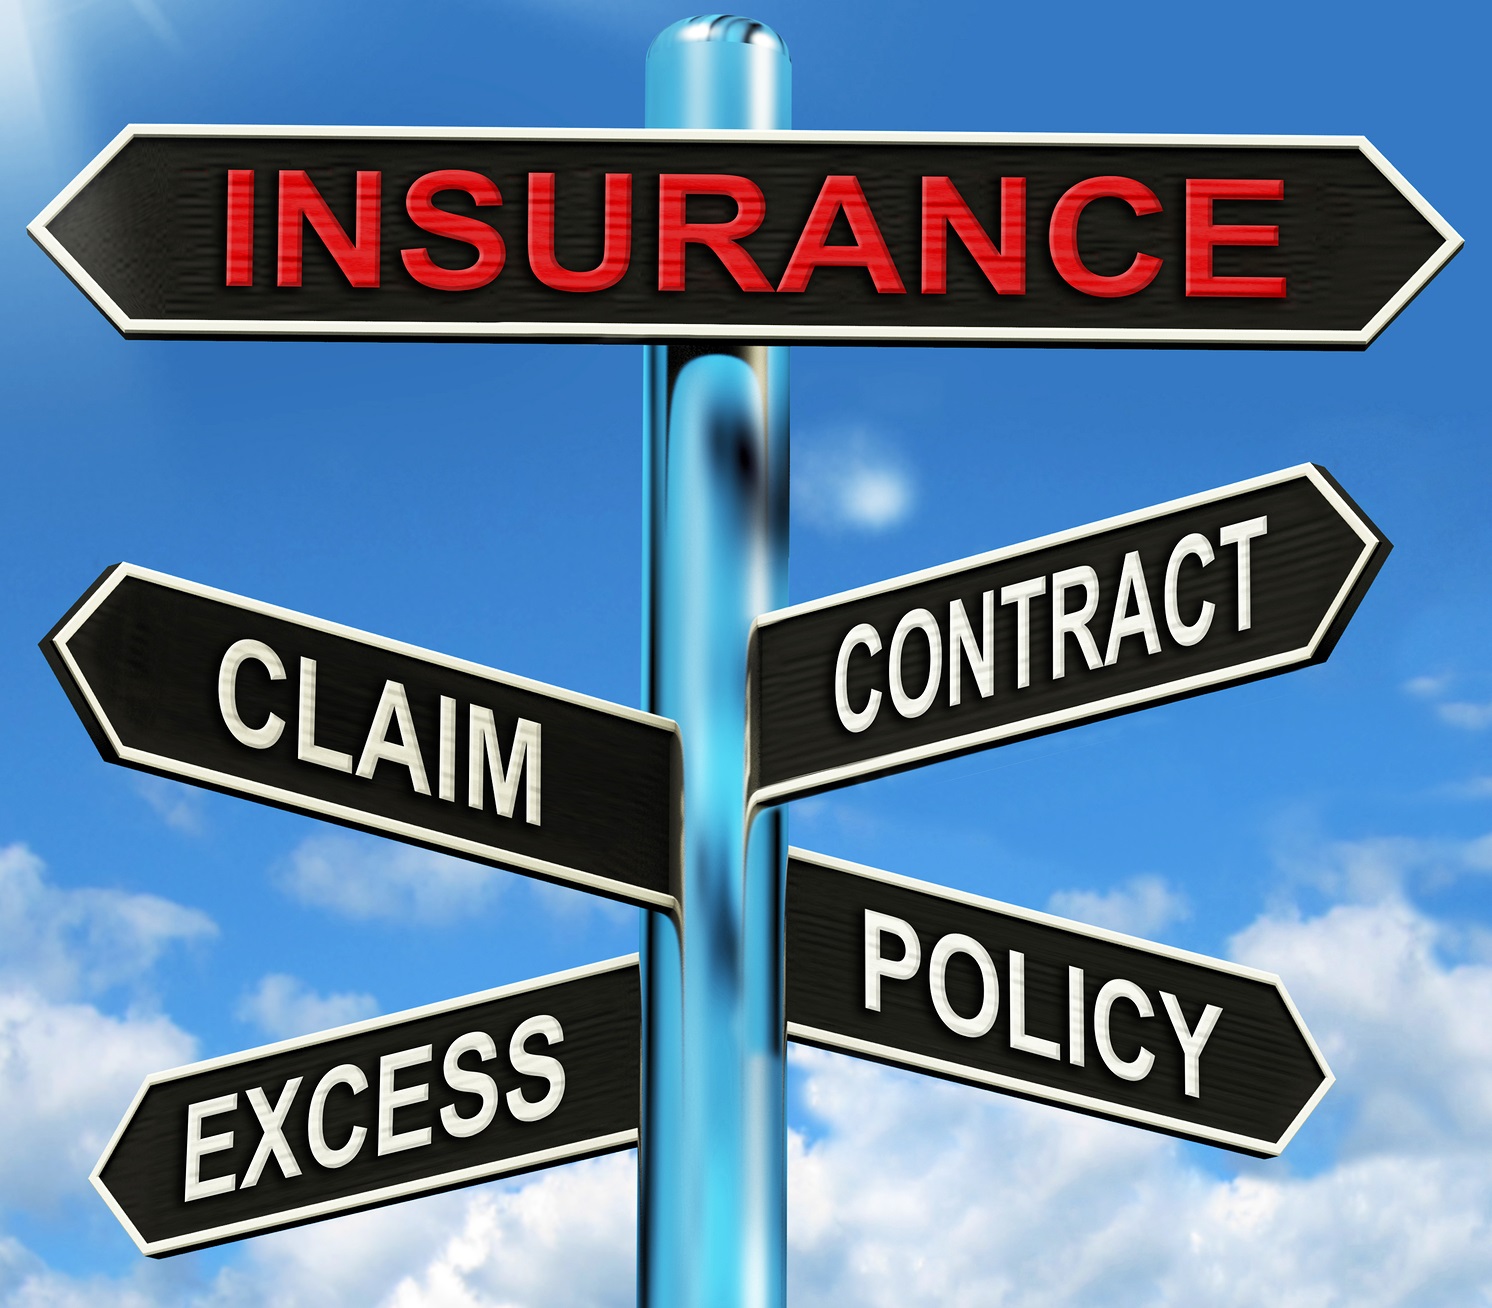 Finding Good Renters Insurance in Naples FL | Online ...